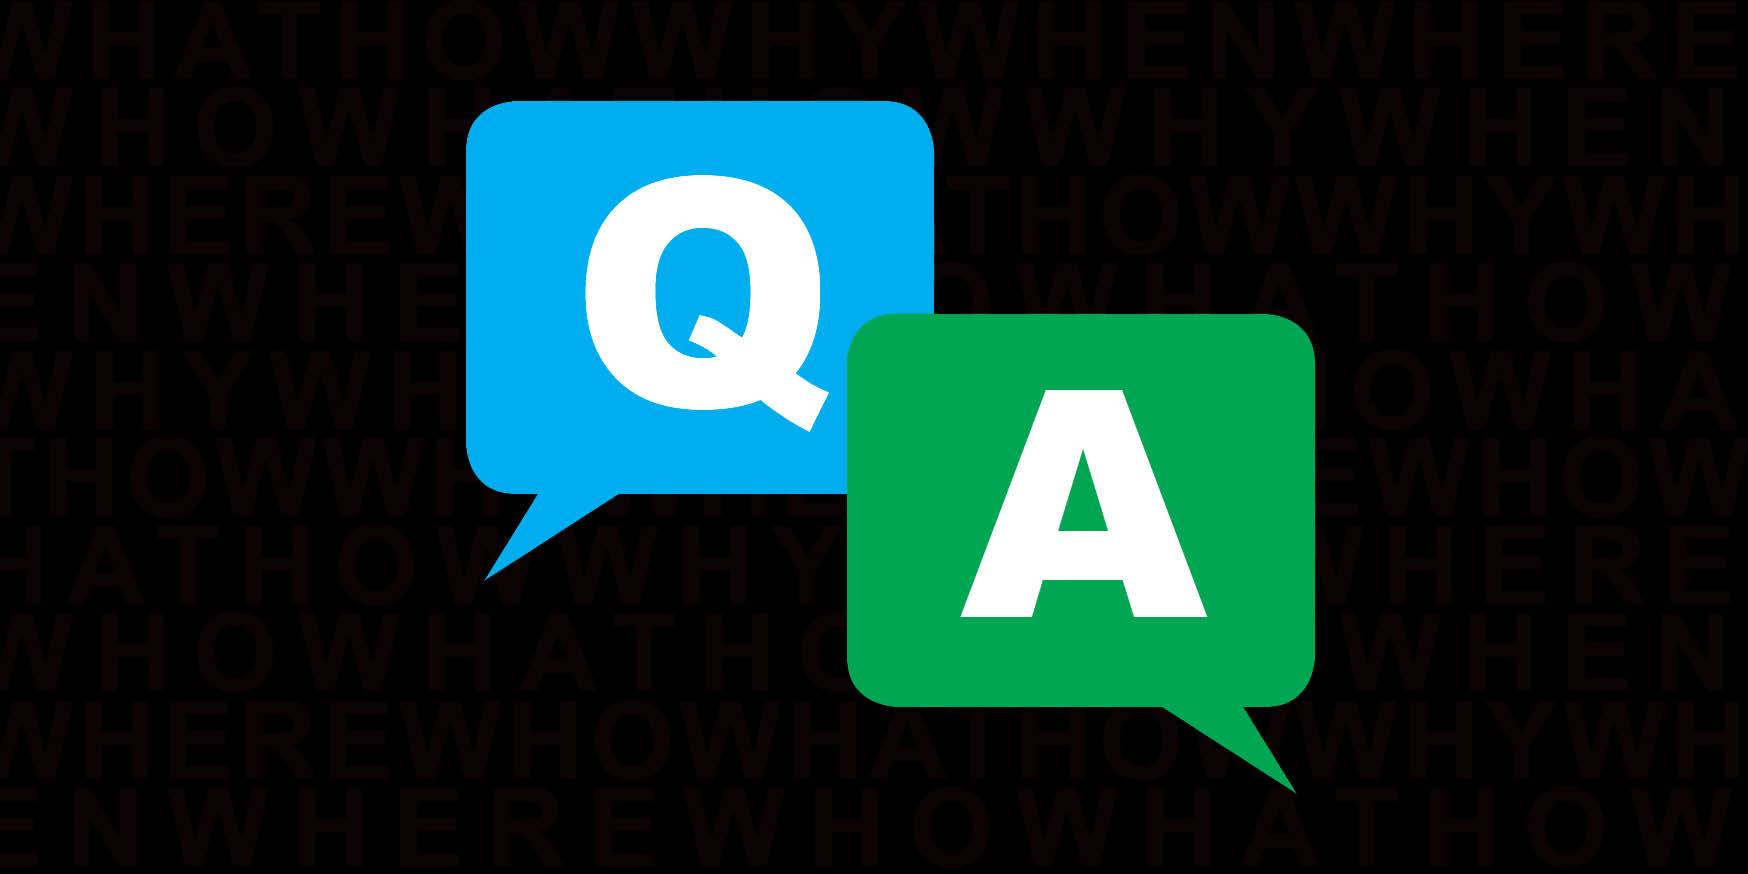 Q & A – 9:30 Service